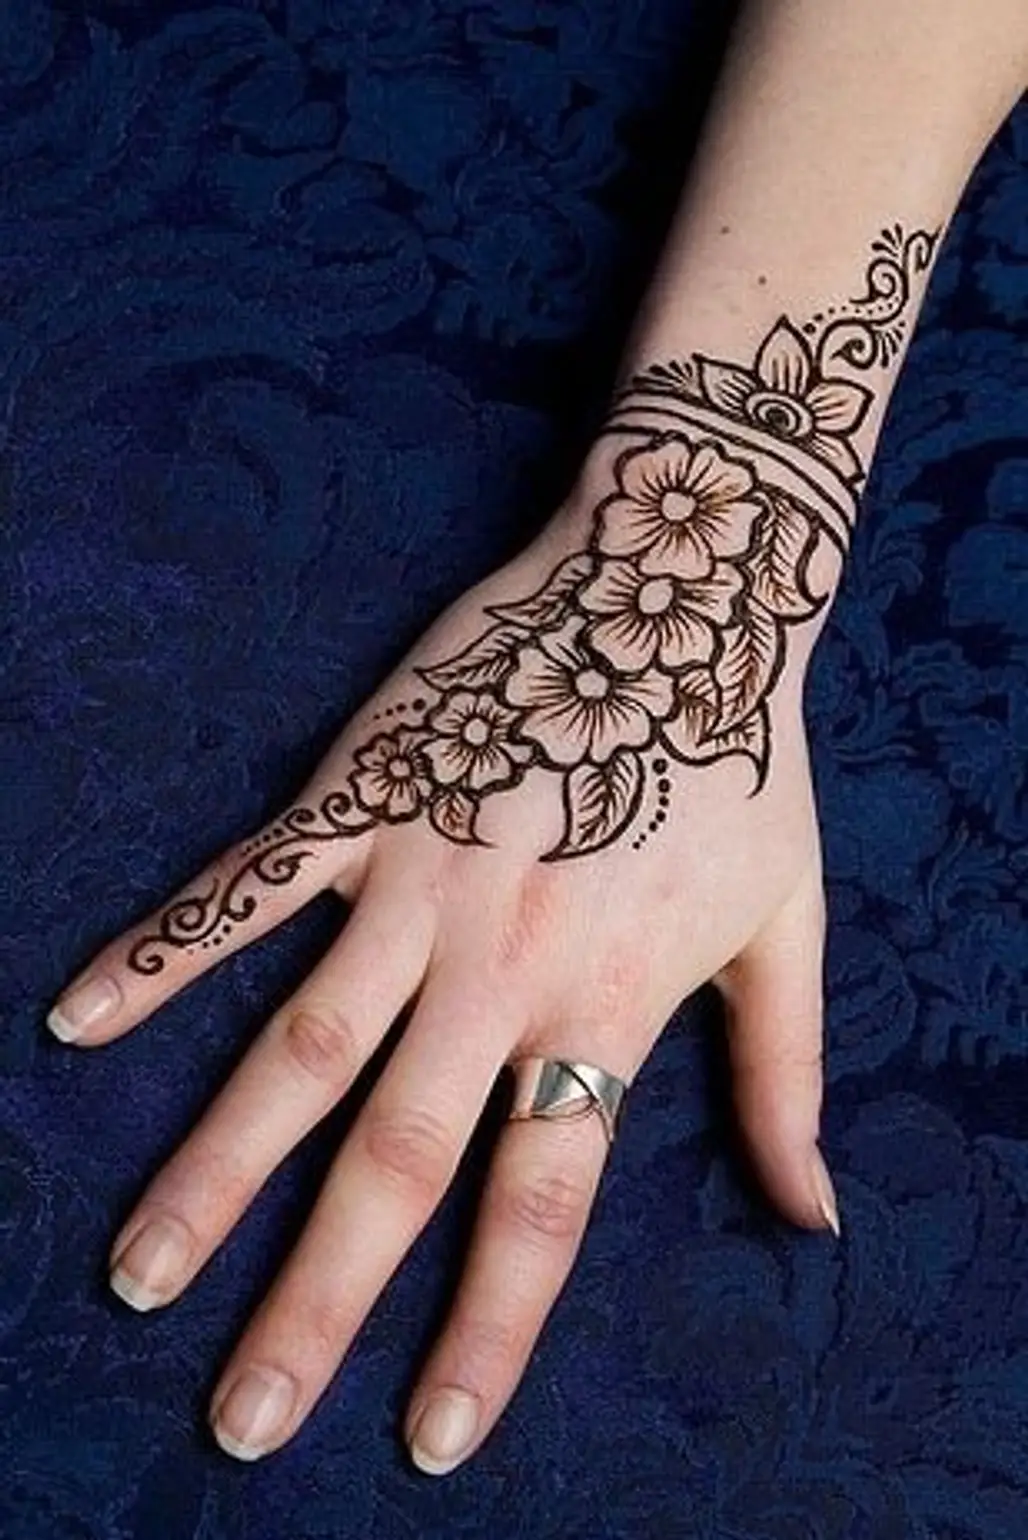 The Prettiest Henna Tattoos on Pinterest | Эскизы татуировок хной на руках,  Узоры рисунков хной, Узоры хной